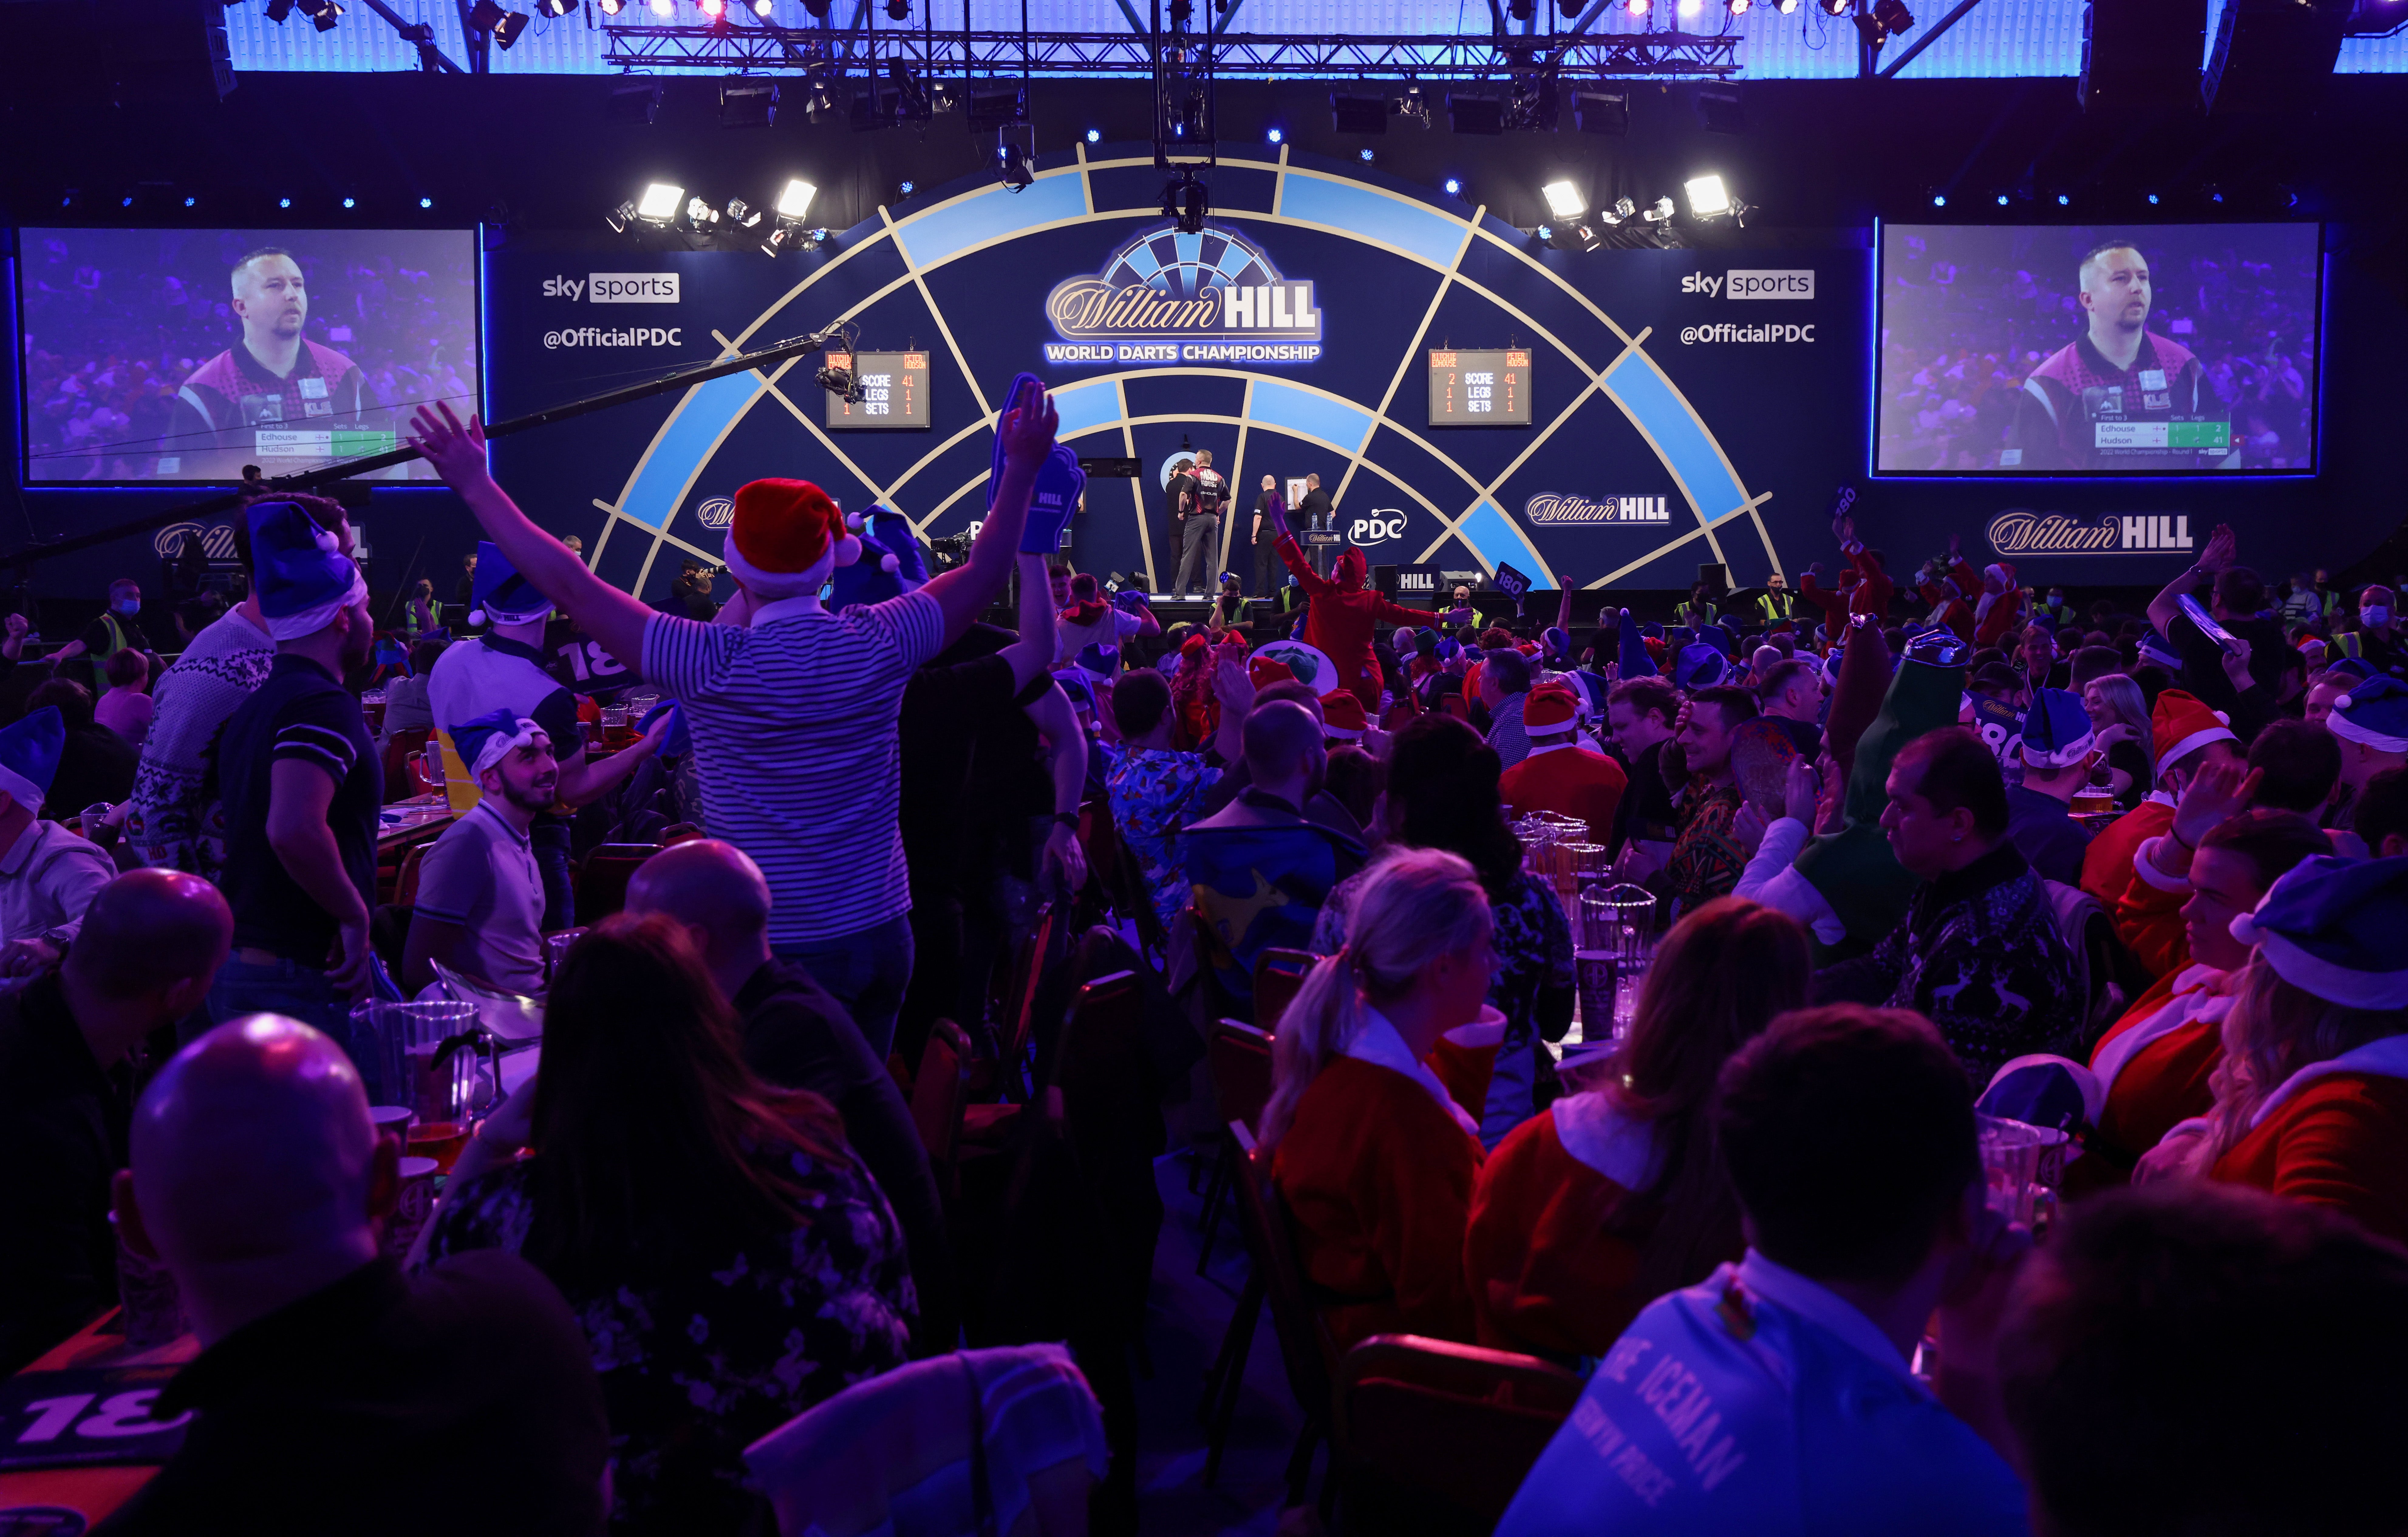 Alexandra Palace hosts the William Hill World Darts Championship